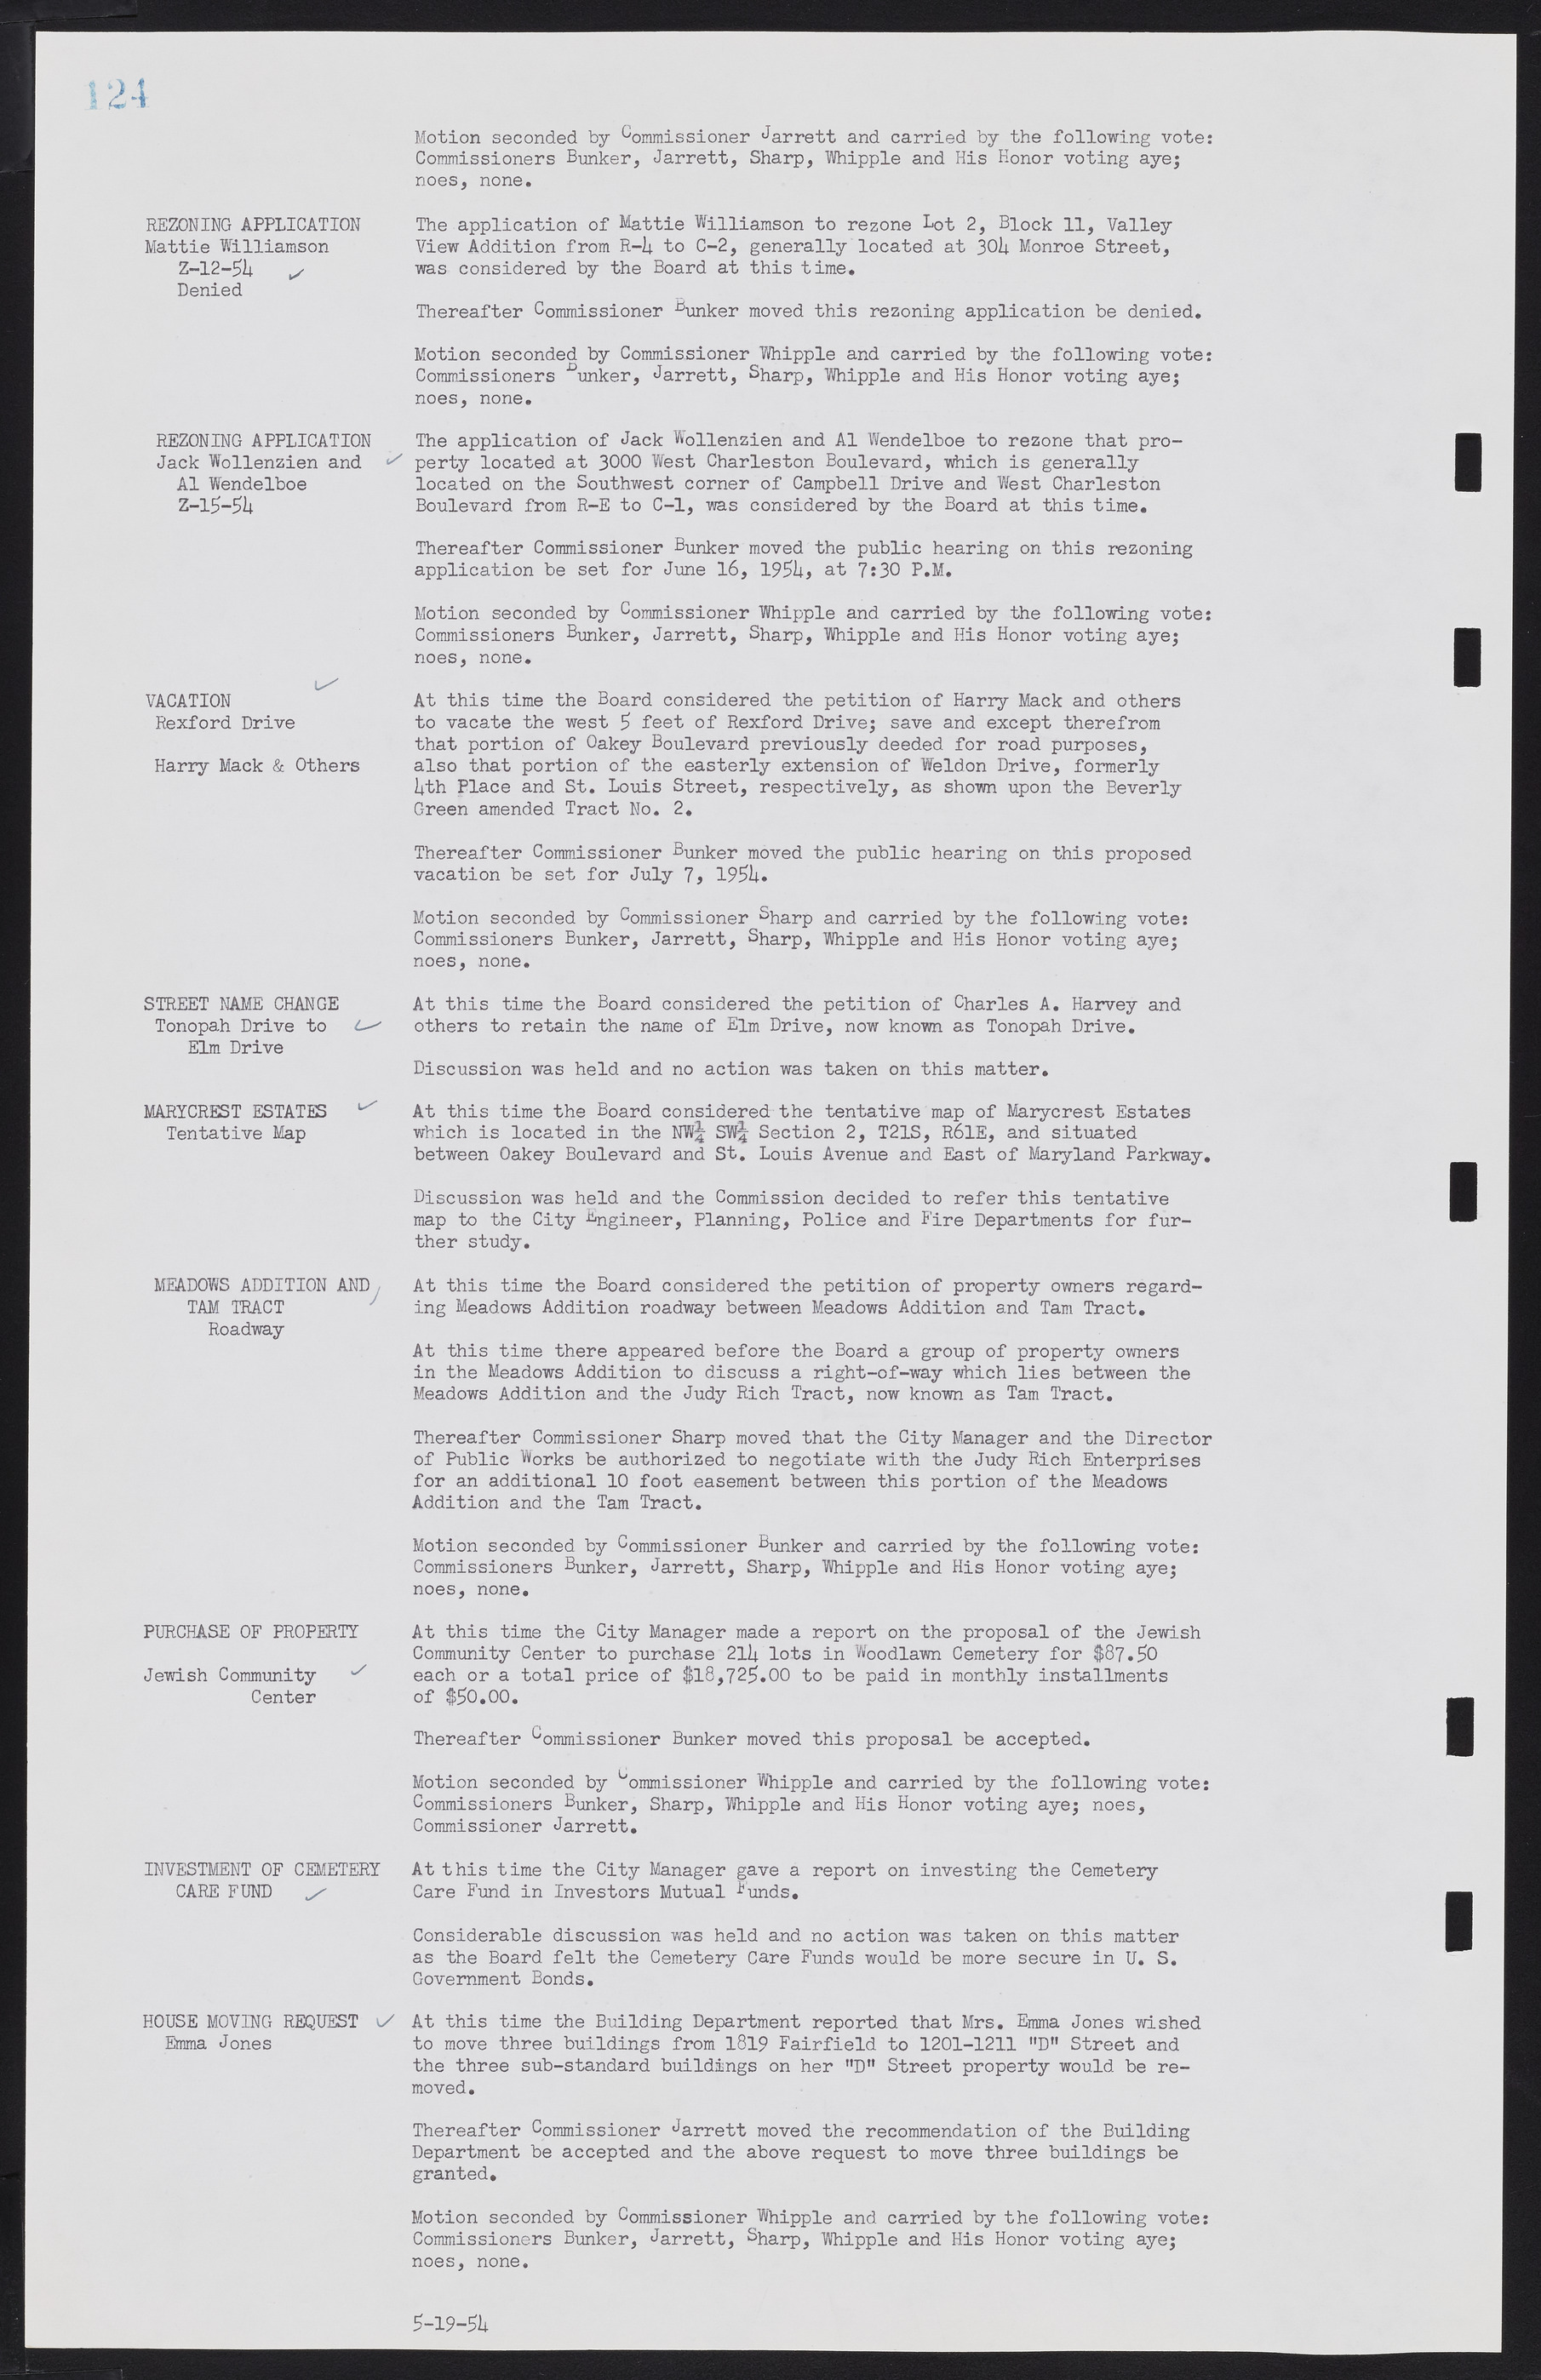 Las Vegas City Commission Minutes, February 17, 1954 to September 21, 1955, lvc000009-128